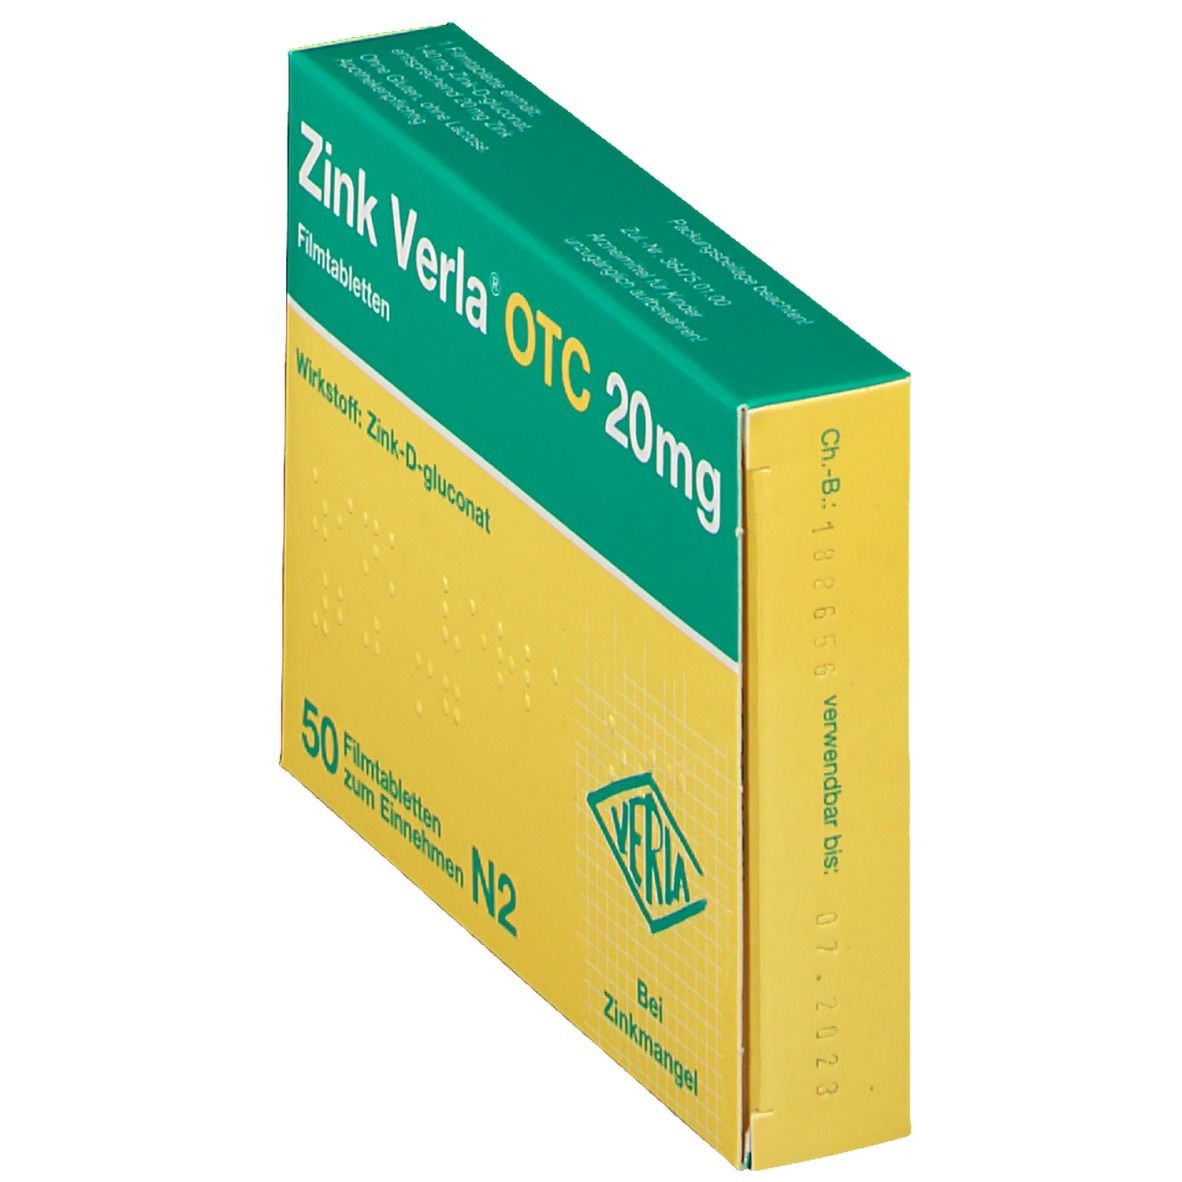 Zink Verla OTC 20 mg Filmtabletten